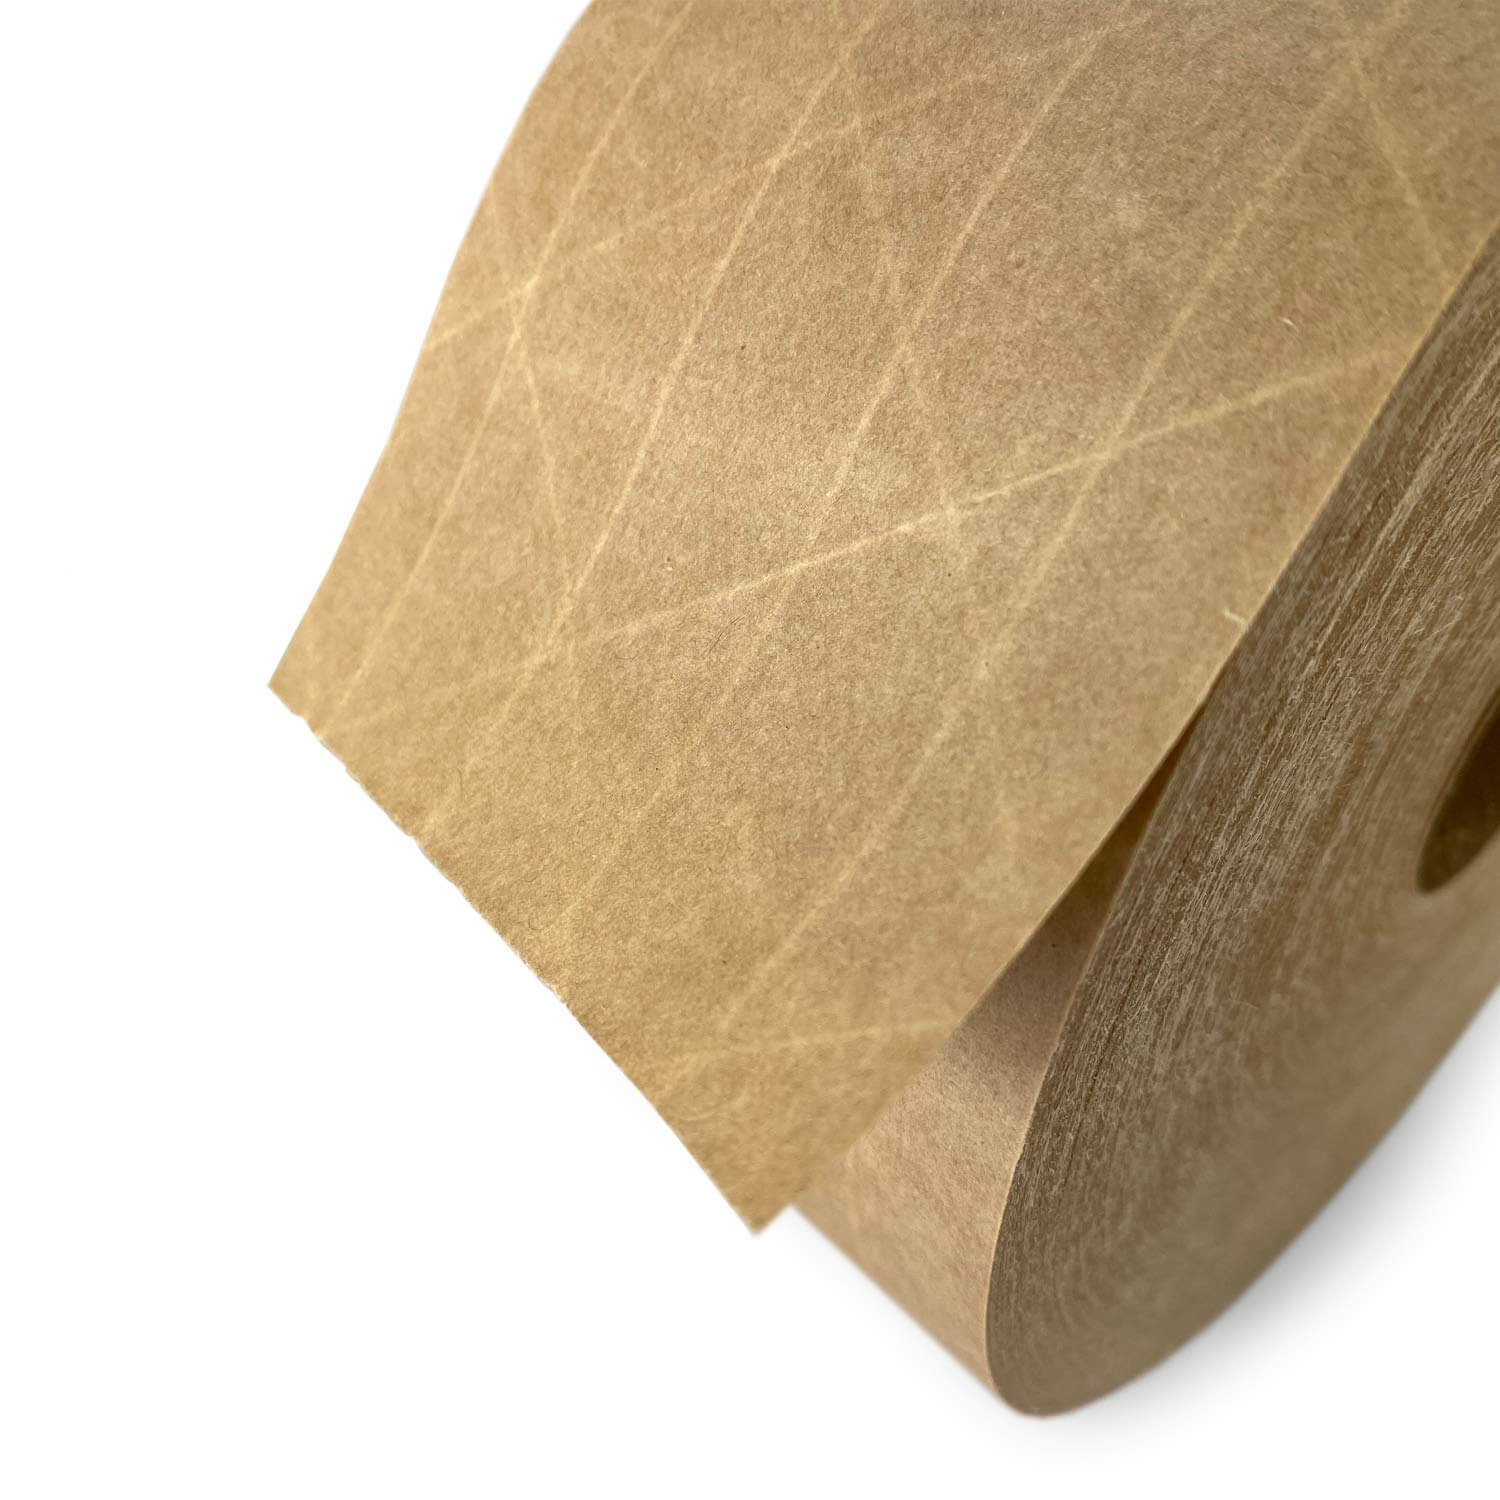 UOFFICE Kraft Paper Roll 600'x48 50lb Strength Brown Shipping Paper Fill